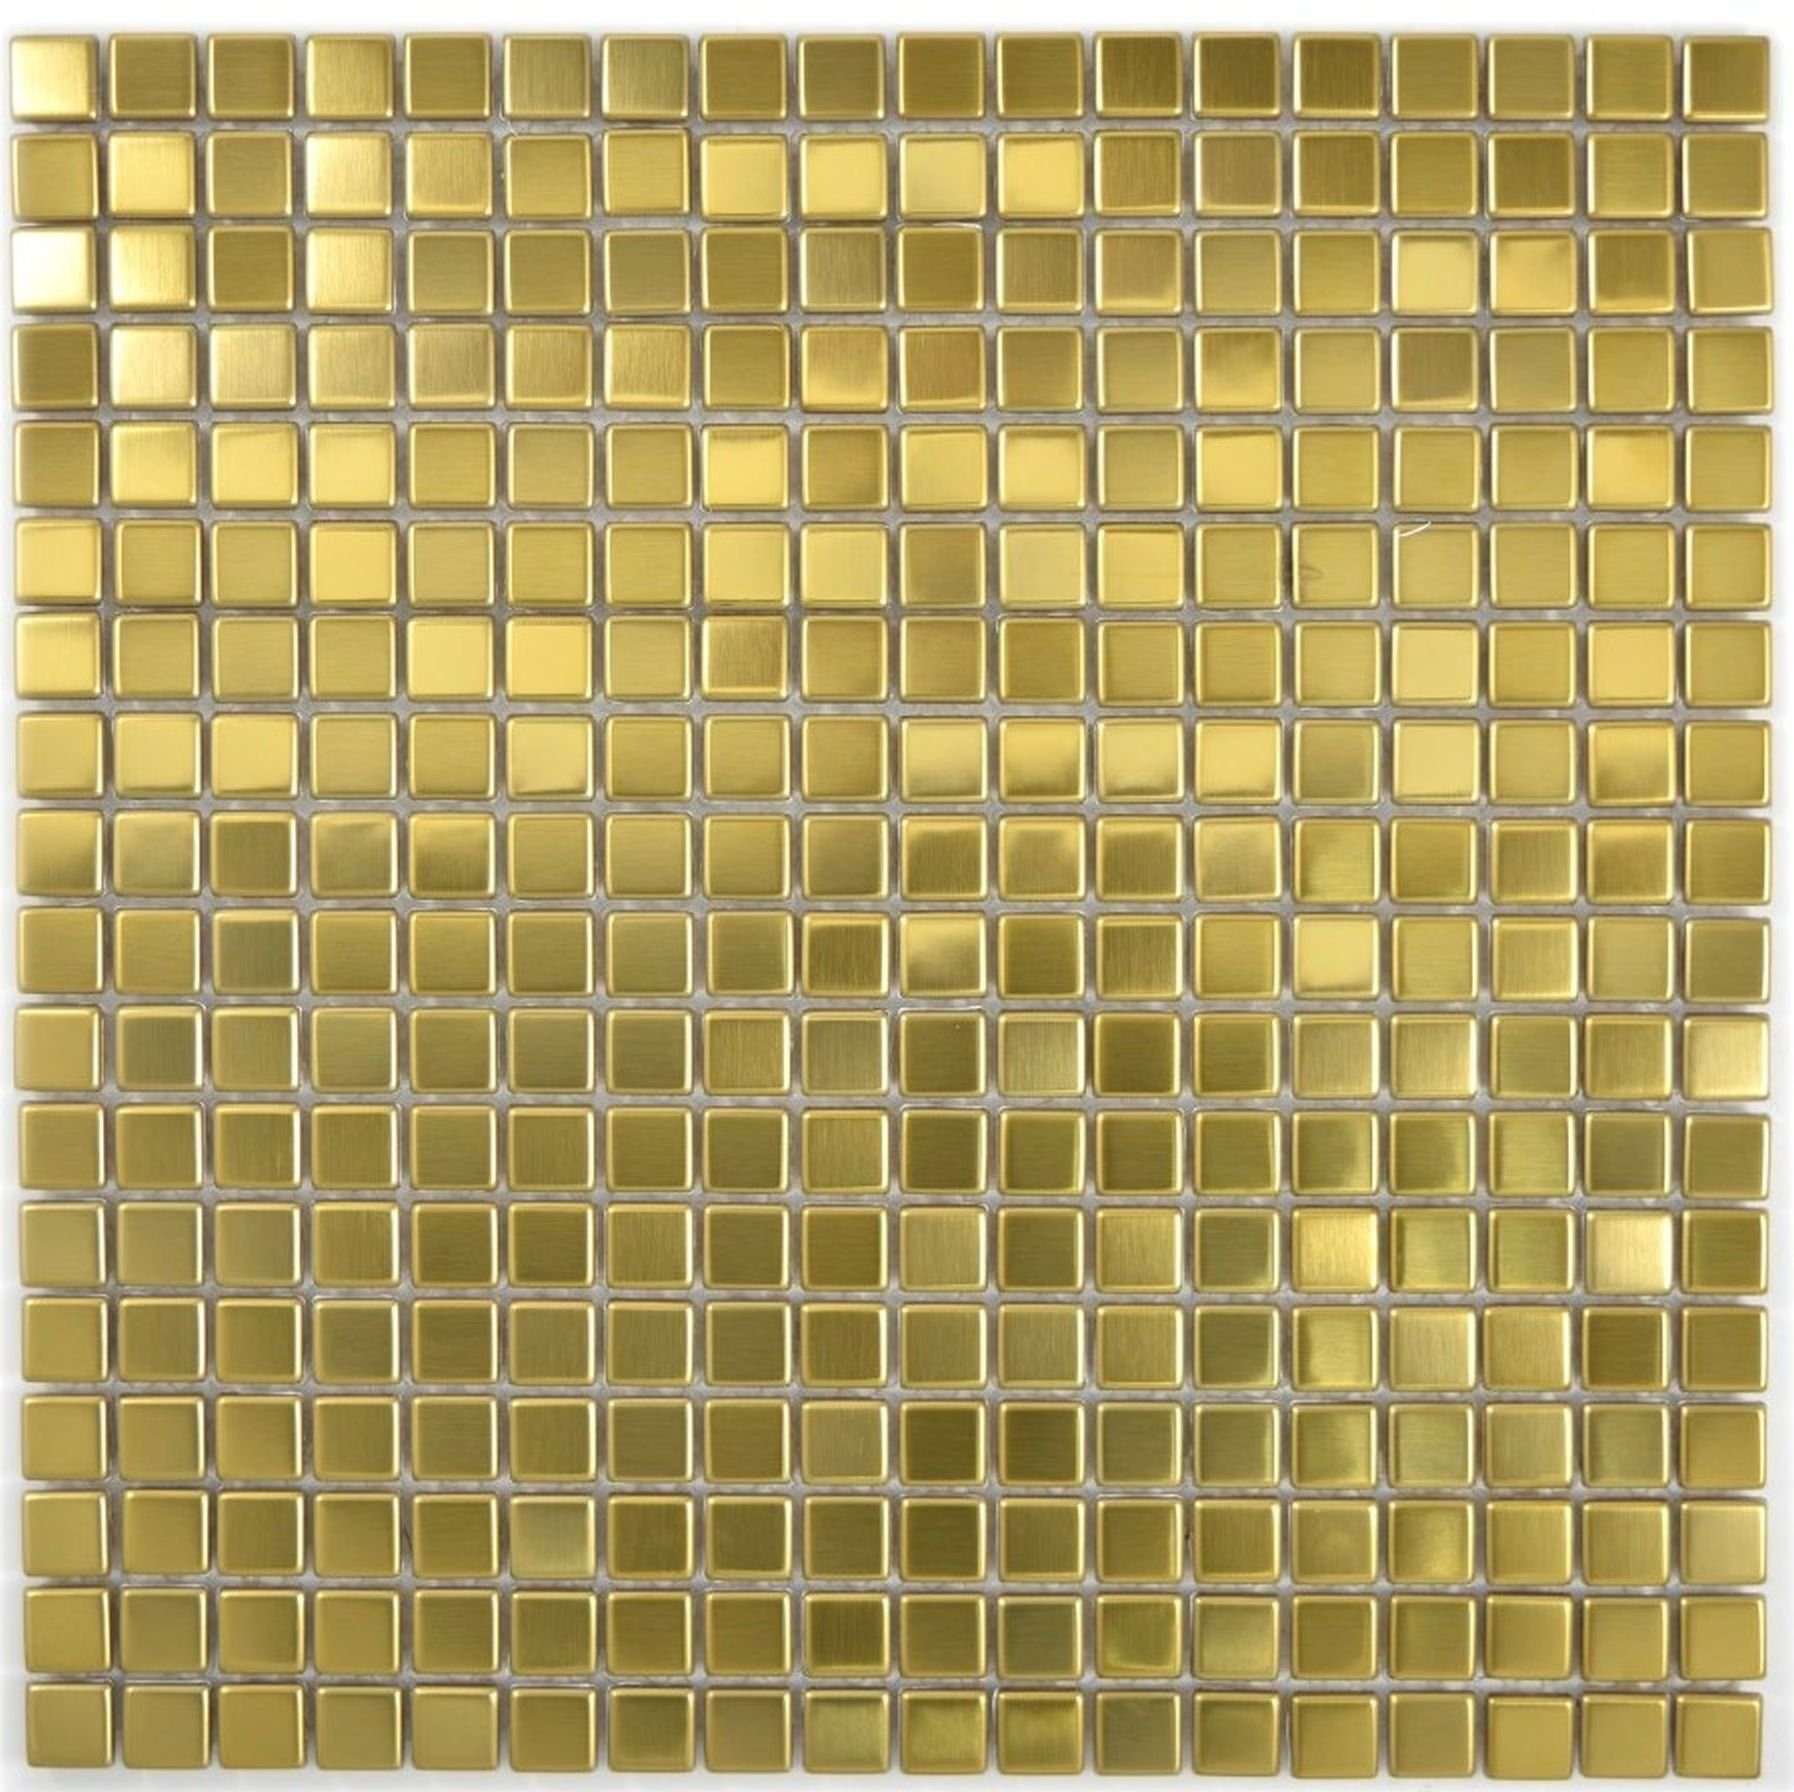 Mosani Mosaikfliesen Edelstahl Mosaik Fliese gold gebürstet matt Küchenwand | Fliesen